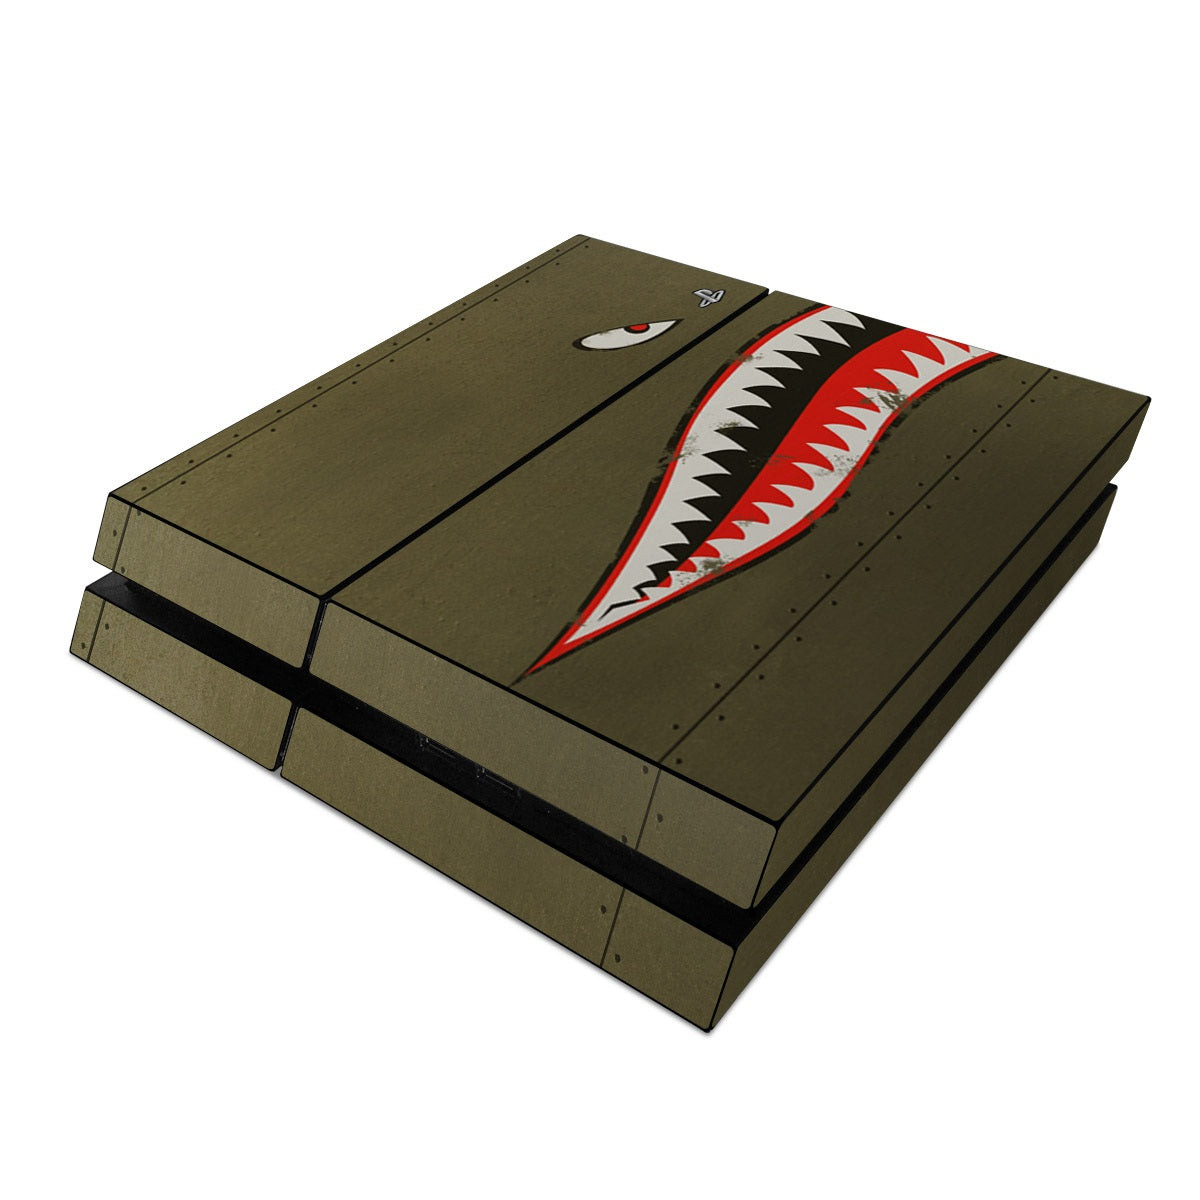 USAF Shark - Sony PS4 Skin